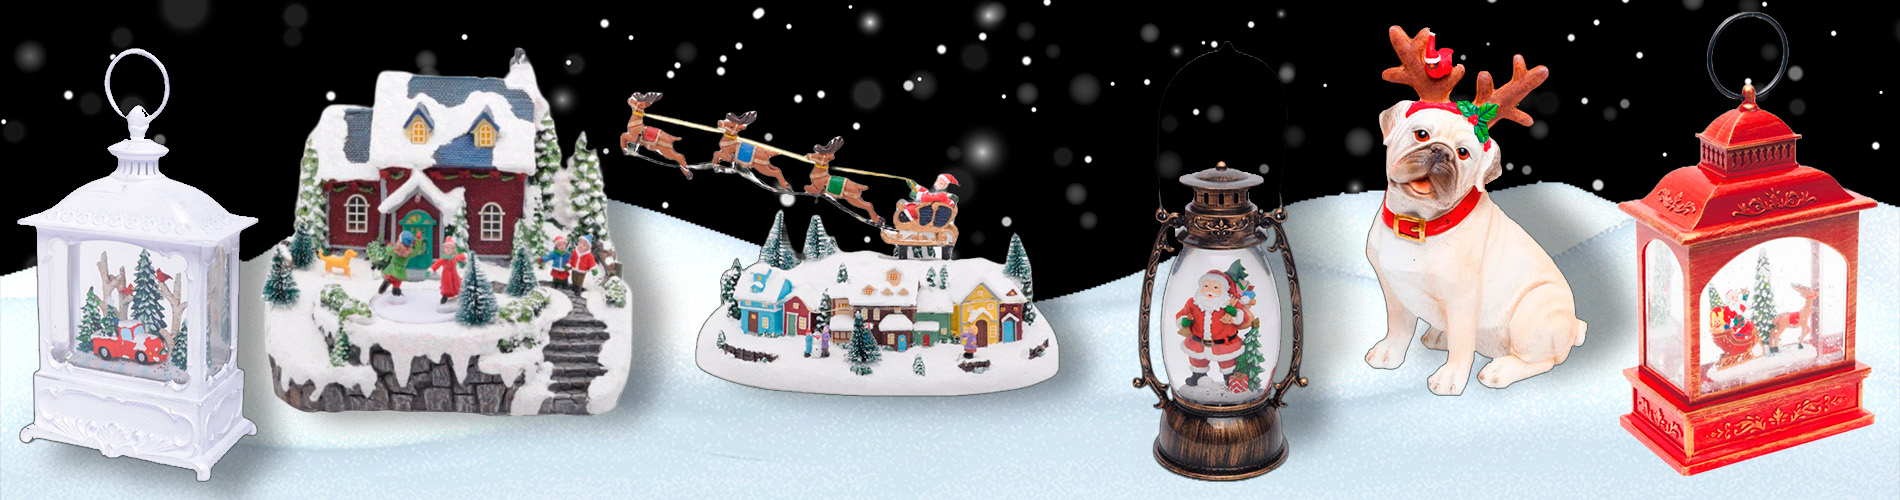 Cenário Decorativo de Natal interativo - Noel Sobrevoando Vila - 1 unidade - Cromus - Rizzo